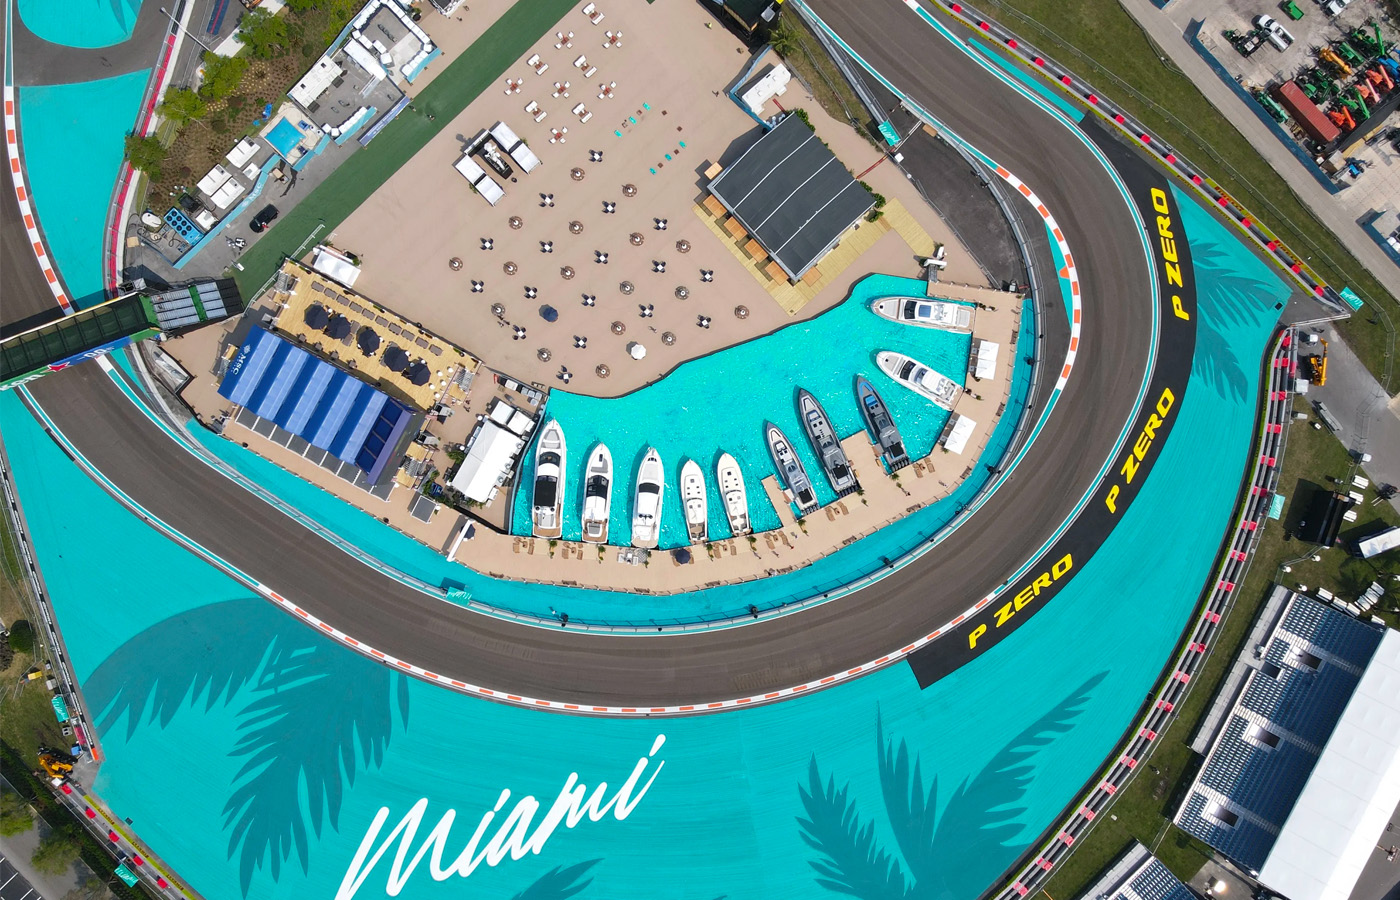 F1 Miami - RoninKeighan